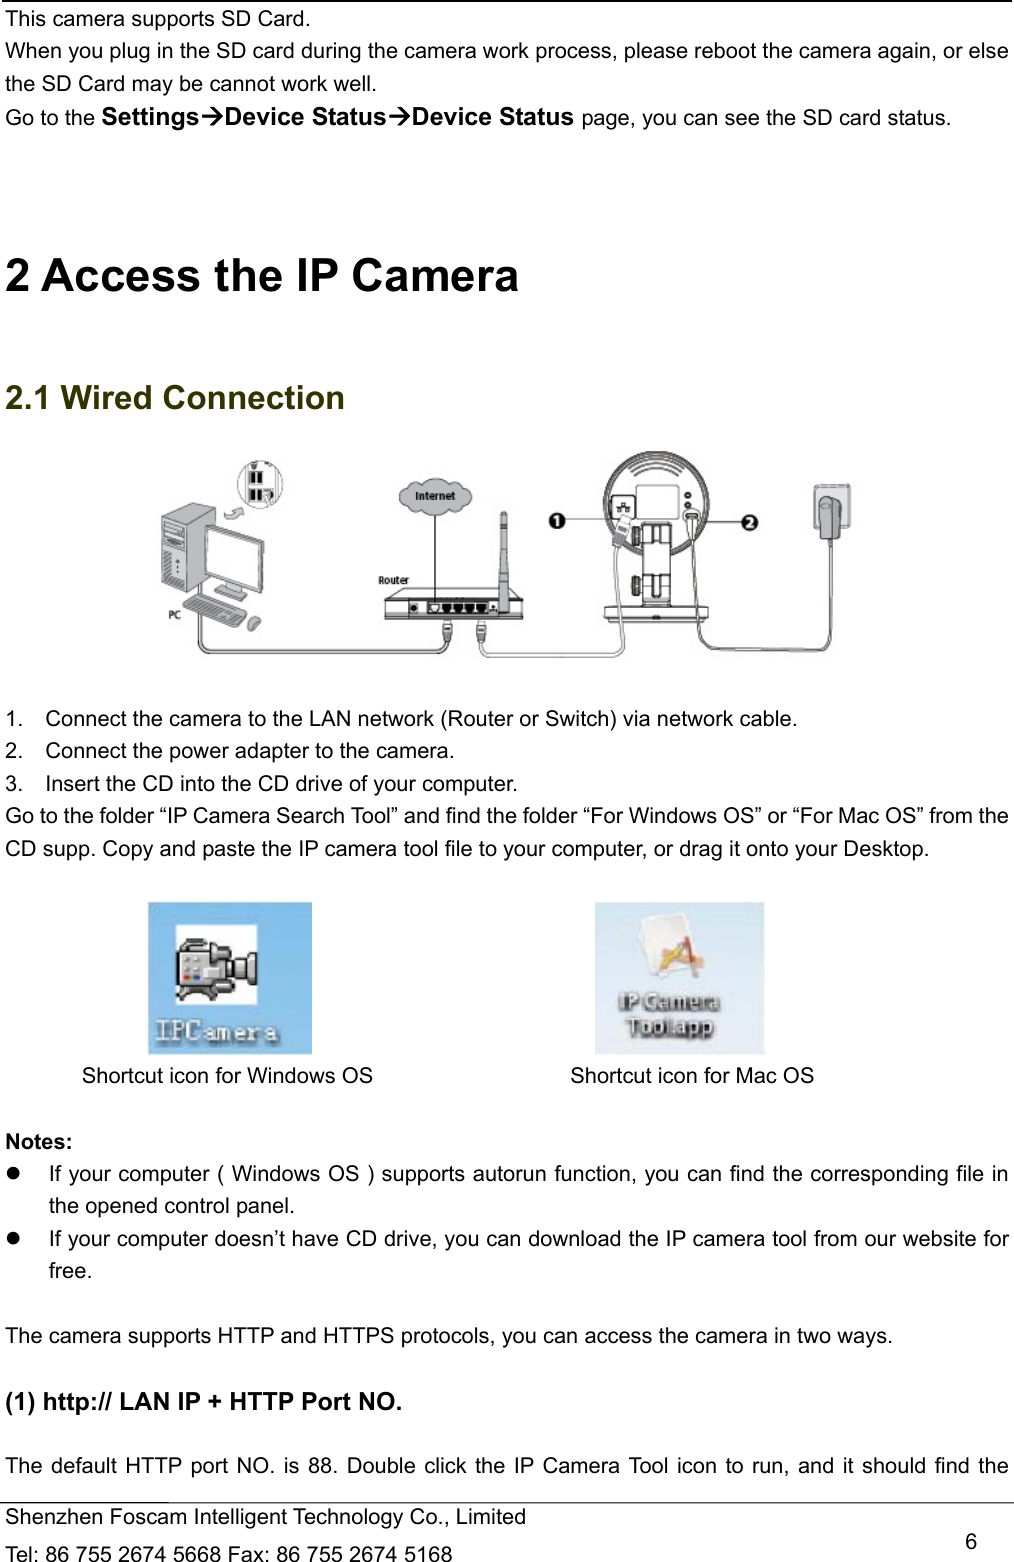 Apexis ip camera software download